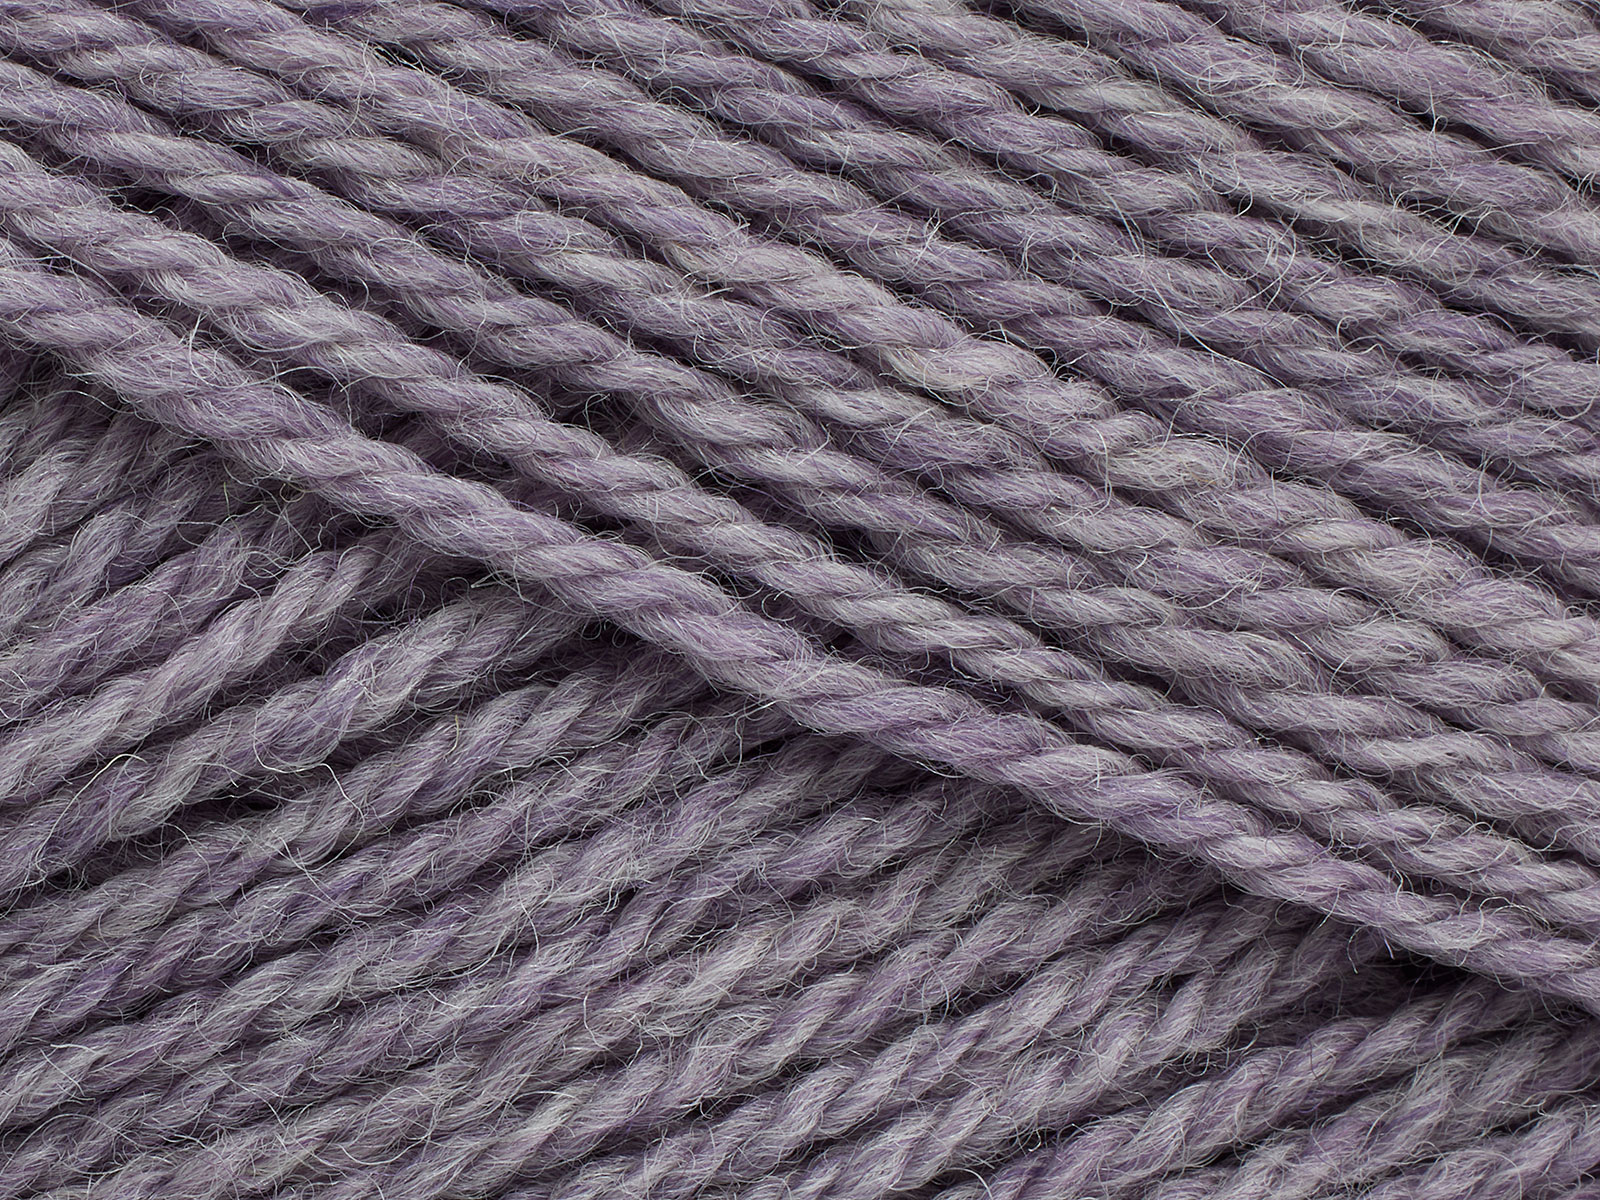 Pernilla - Lavender Grey (815)